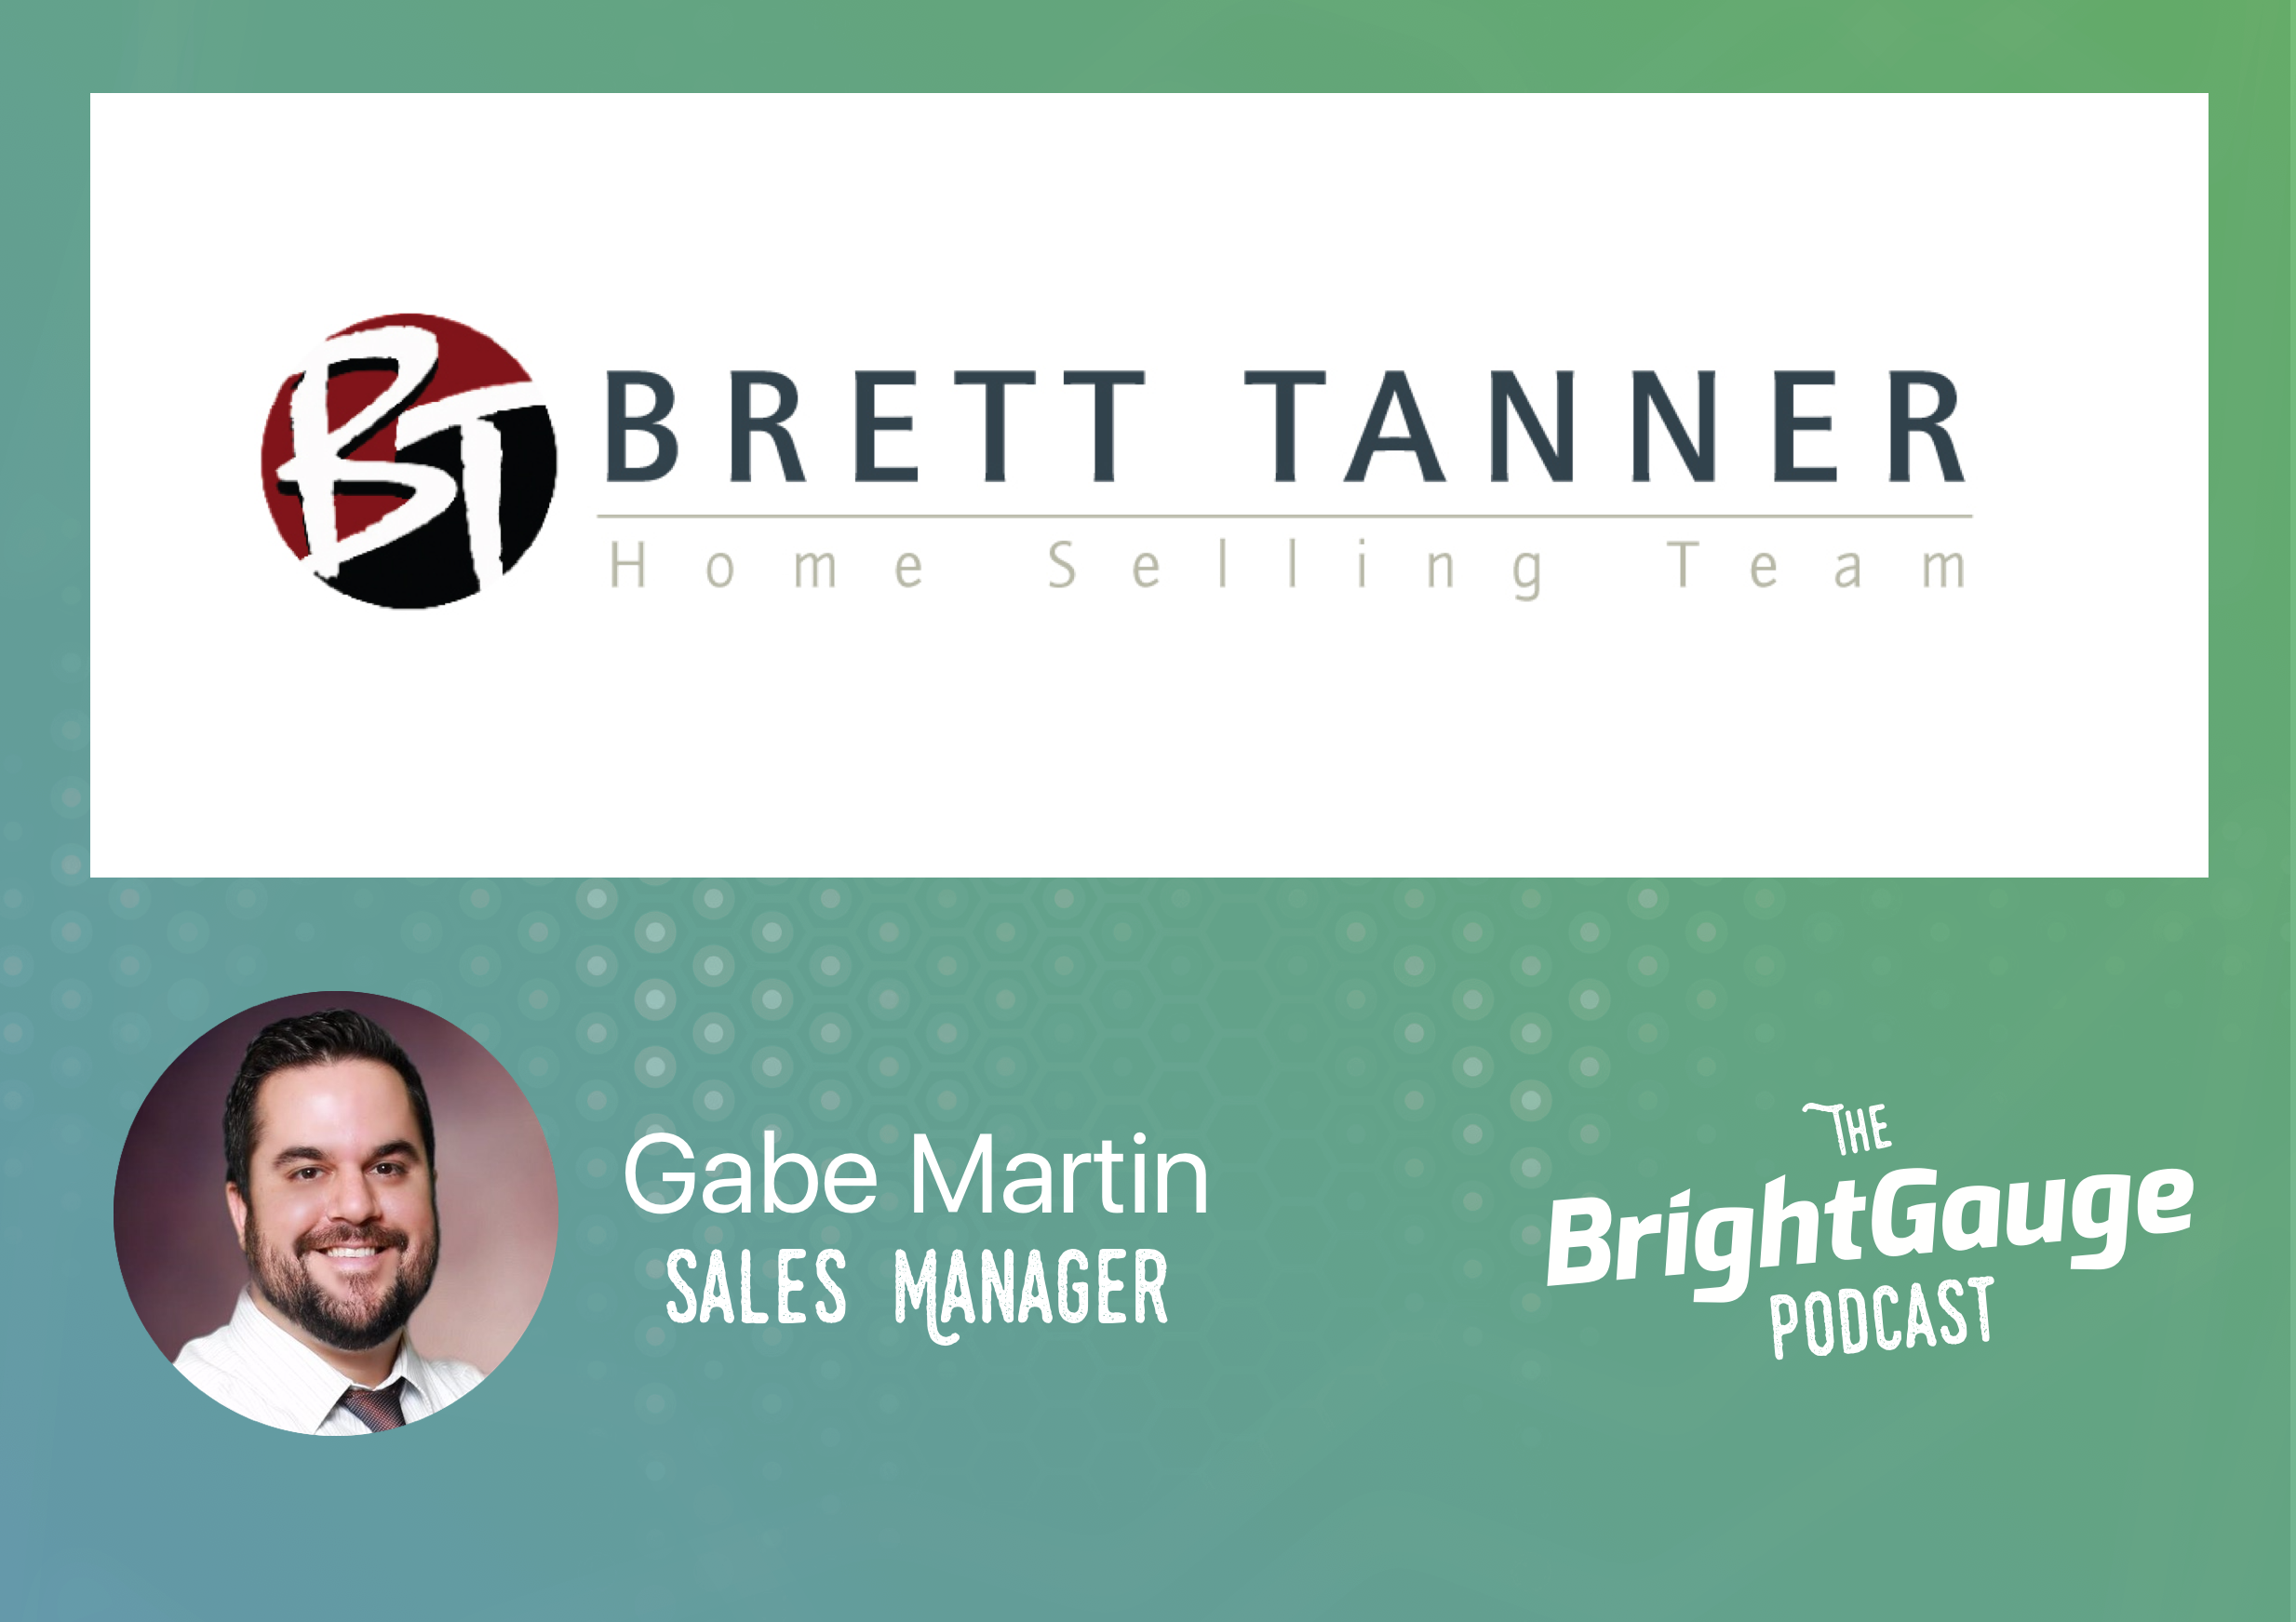 [Podcast] Episode 16 with Gabe Martin of the Brett Tanner Team